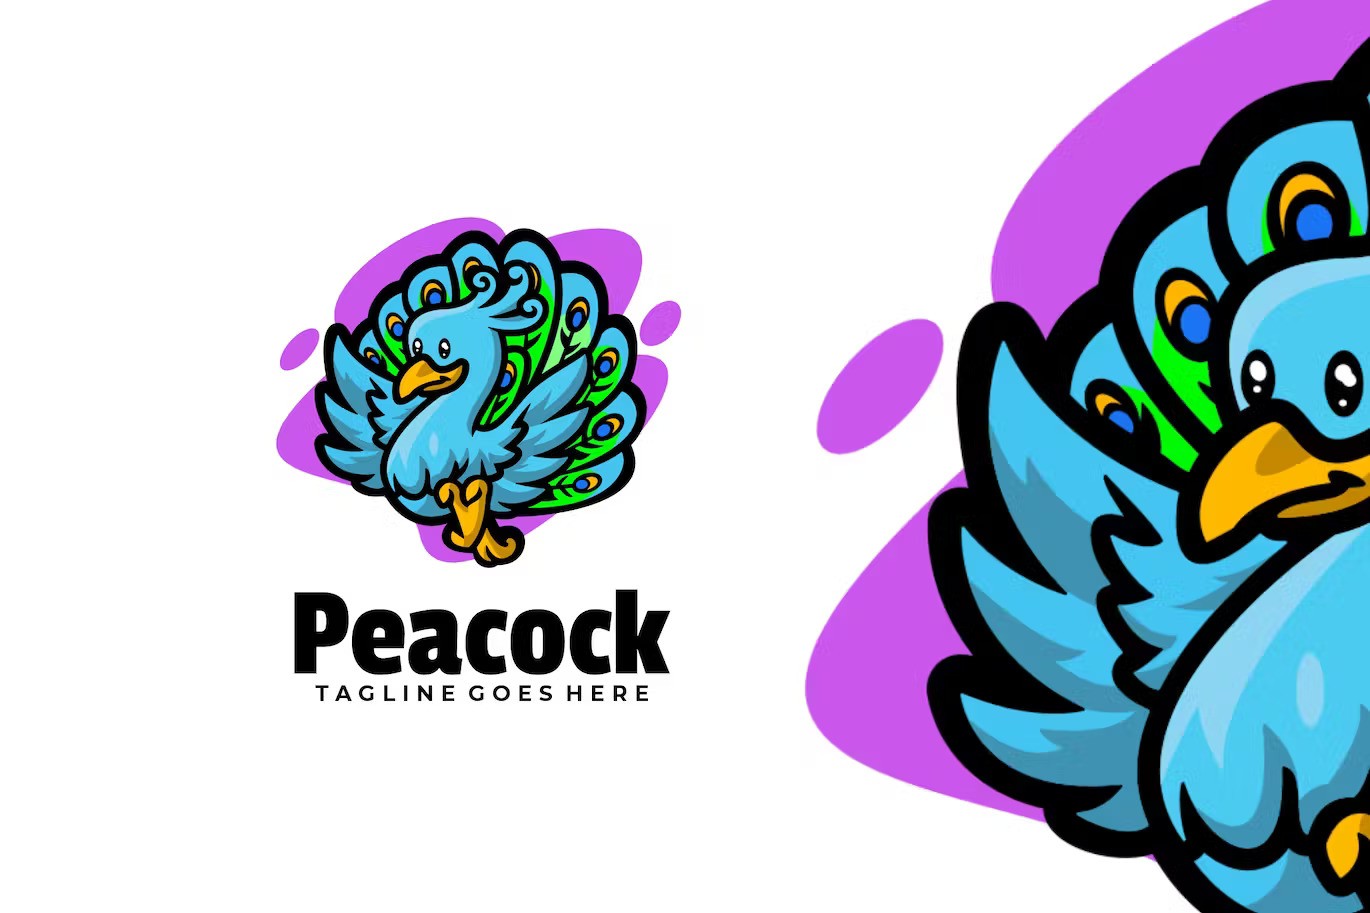 A cute peacock mascot logo design